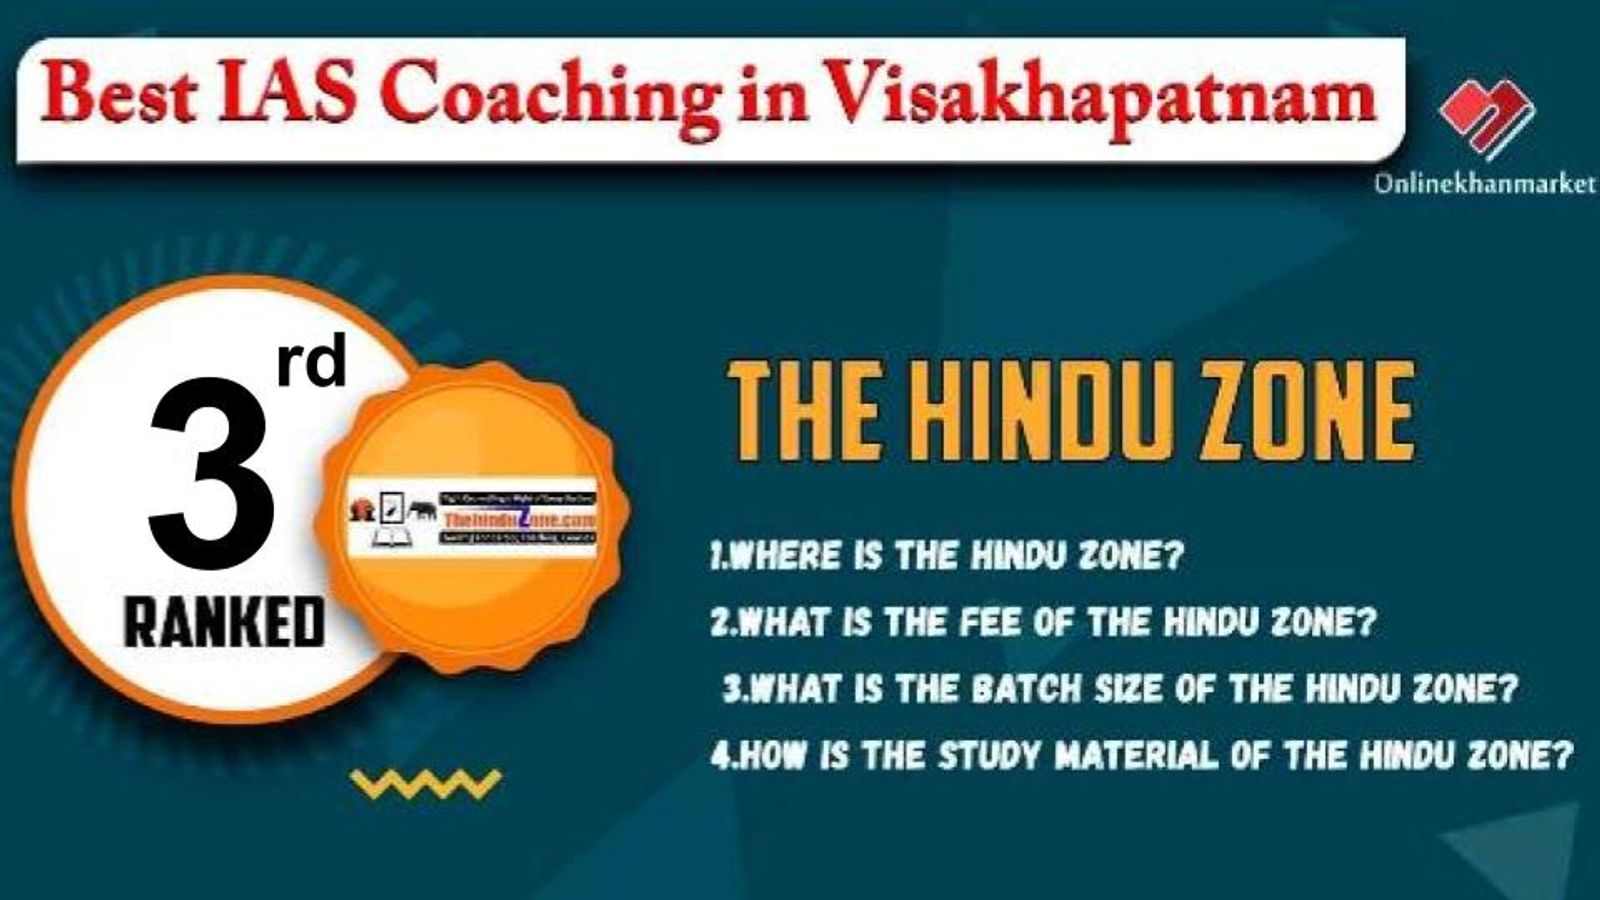 Best IAS Coaching In Visakhapatnam